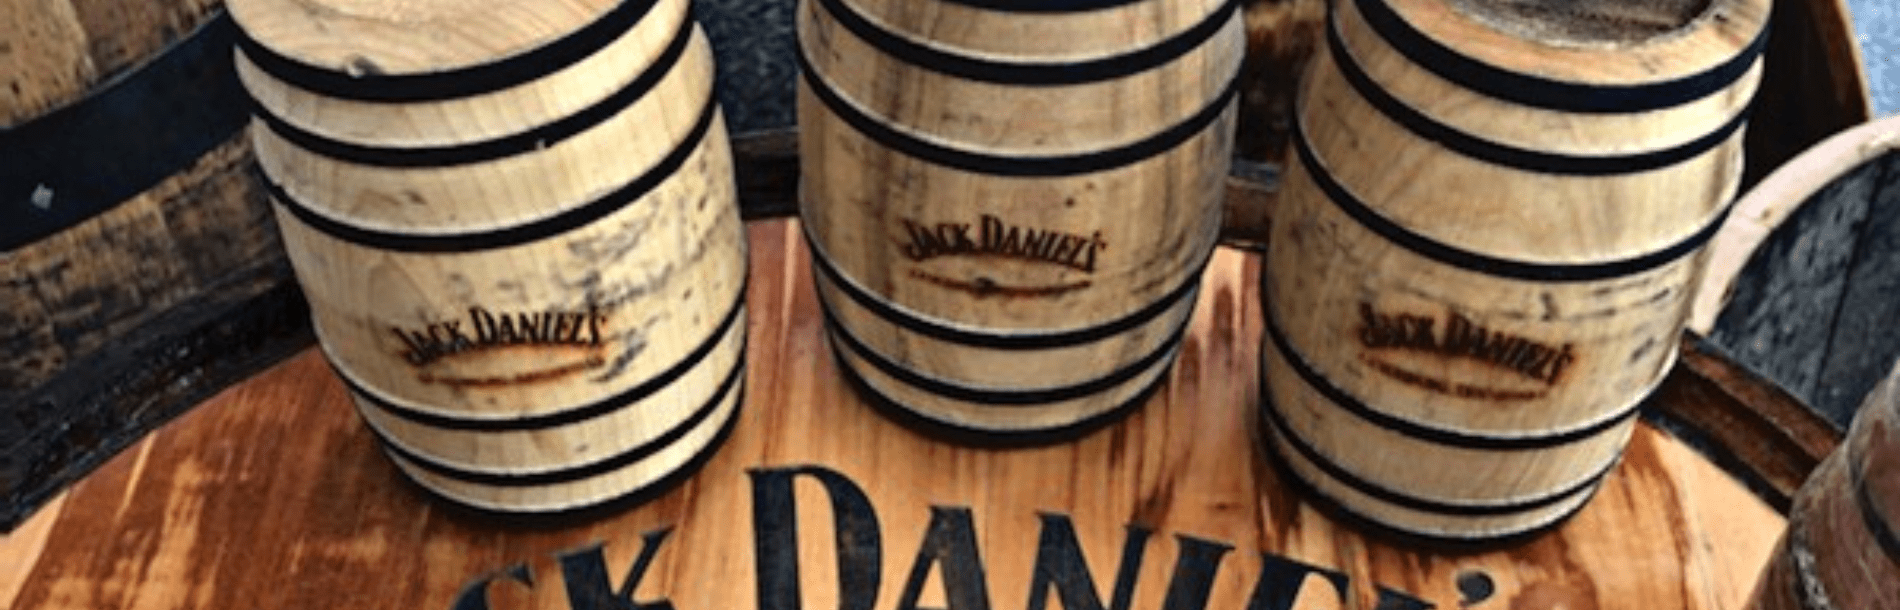 Jack Daniel's whiskey barrel